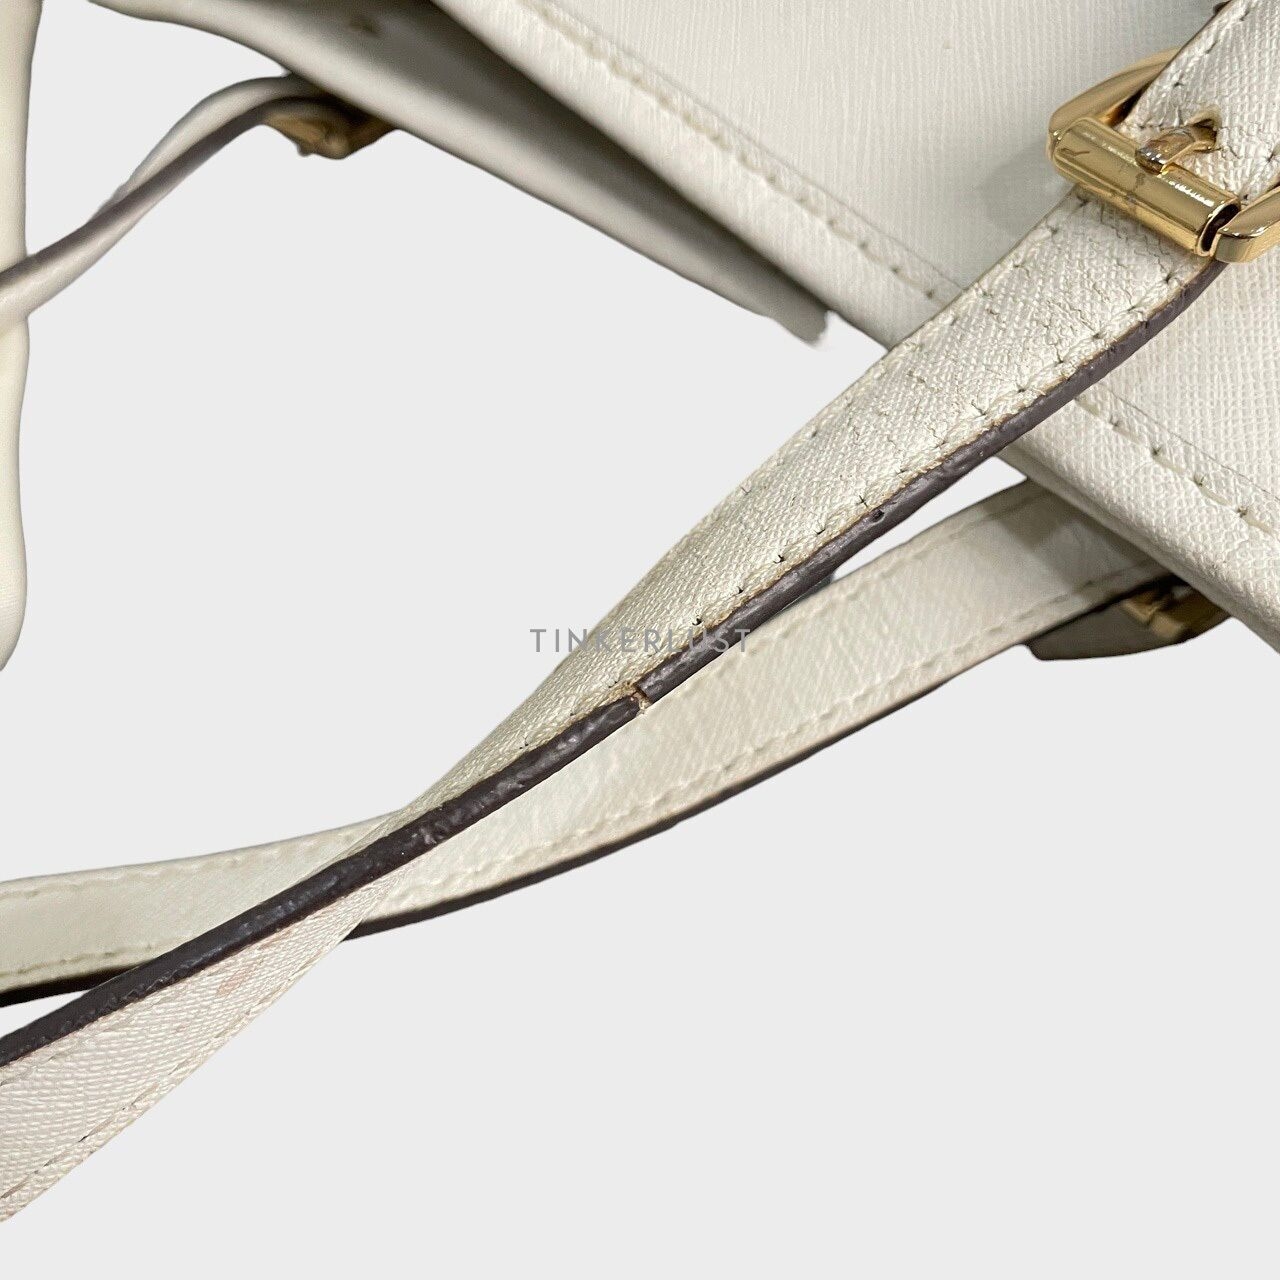 Michael Kors Jet Set Travel Optic White Multifunction Tote Bag